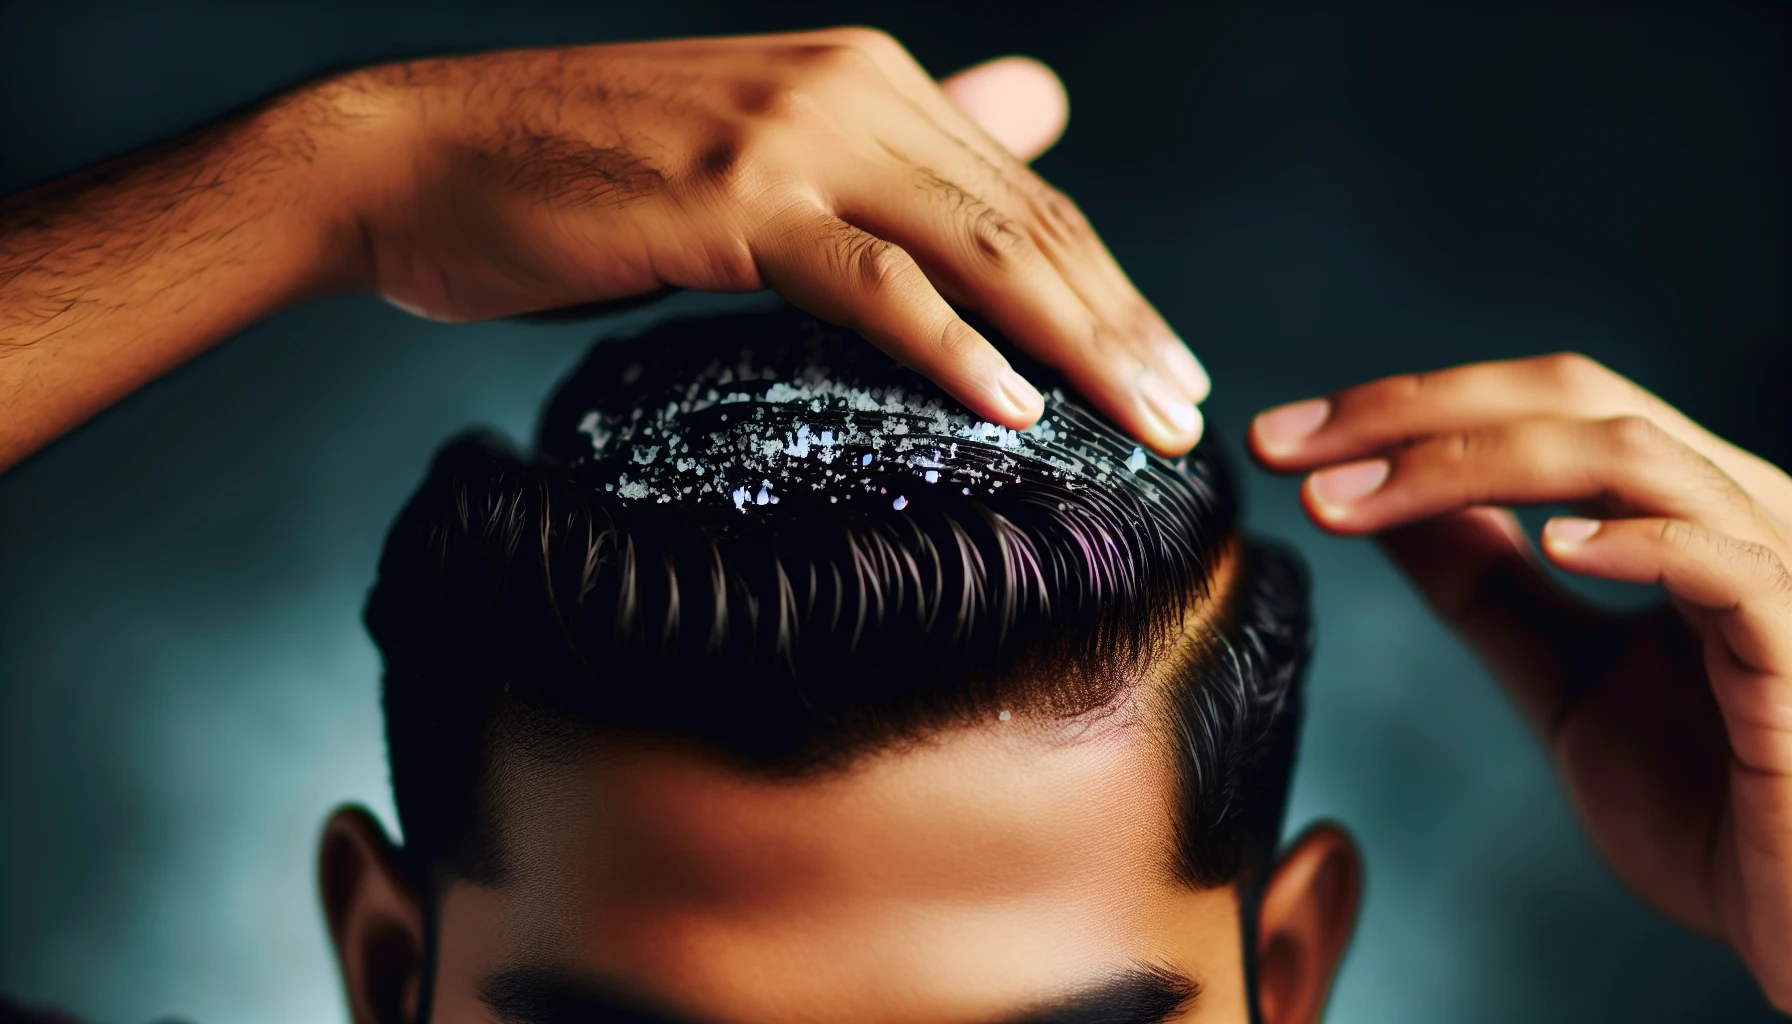 A close-up of a man applying a scalp scrub with Epsom salt